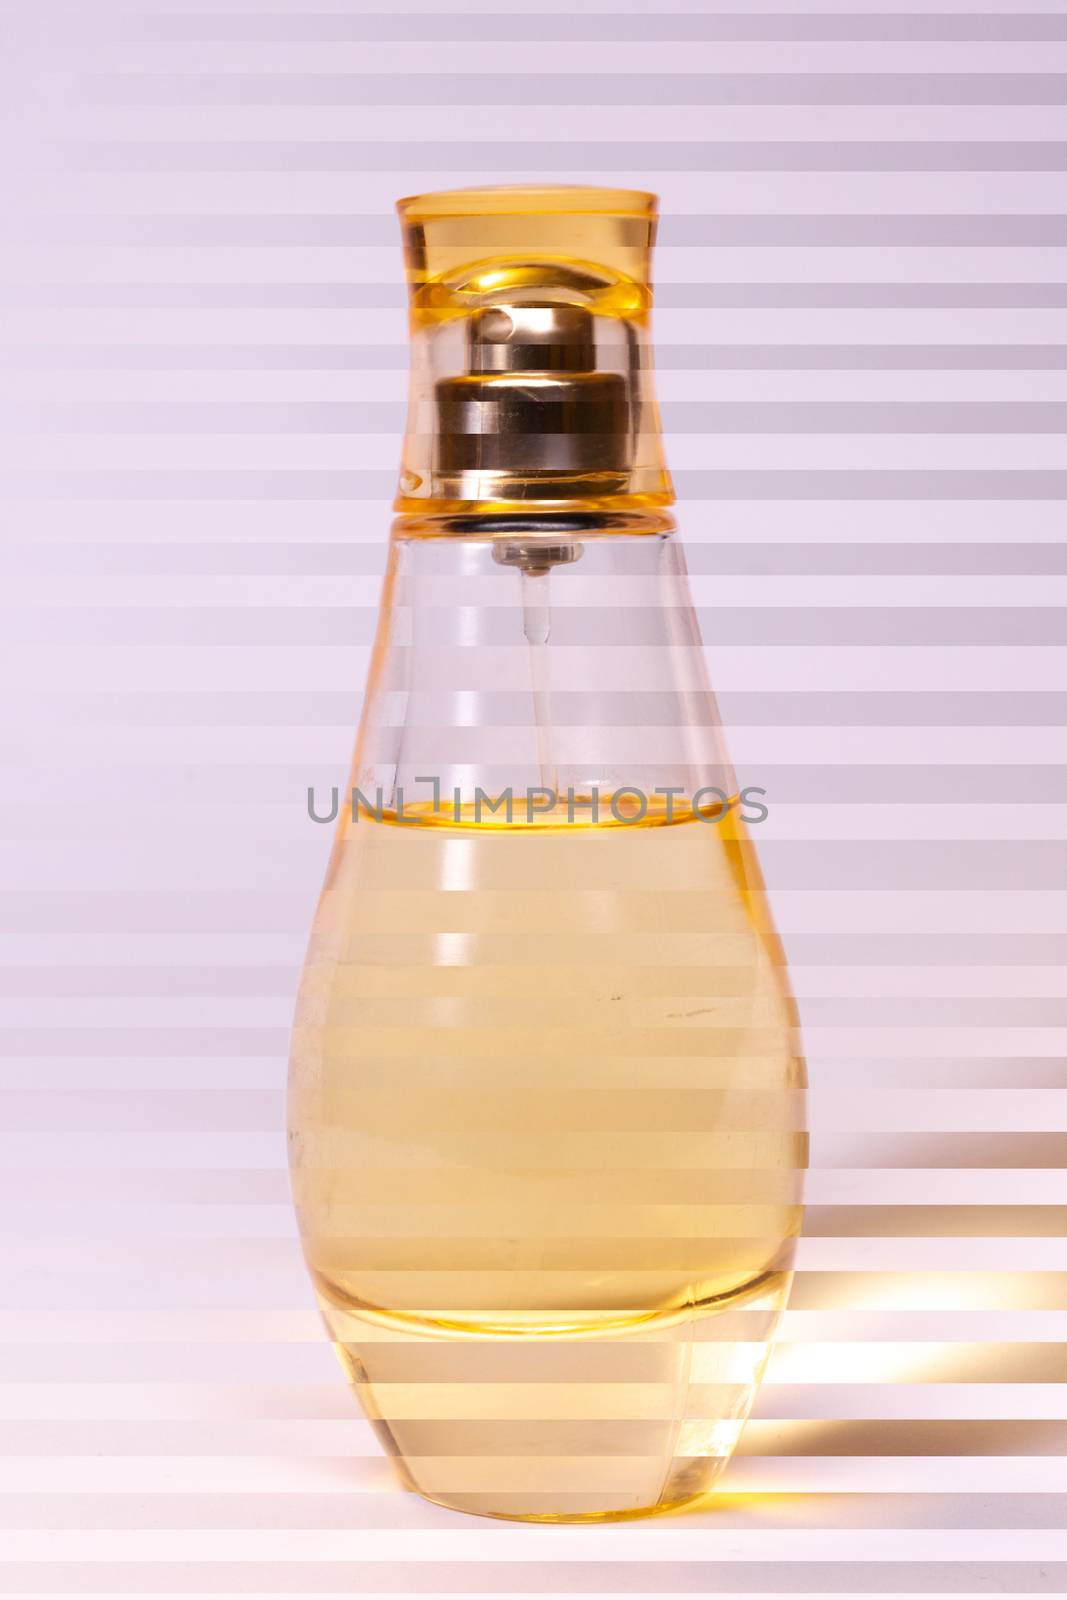 Warm yellow colour glass parfum bottle on white-purple background. Photo contains stripes.